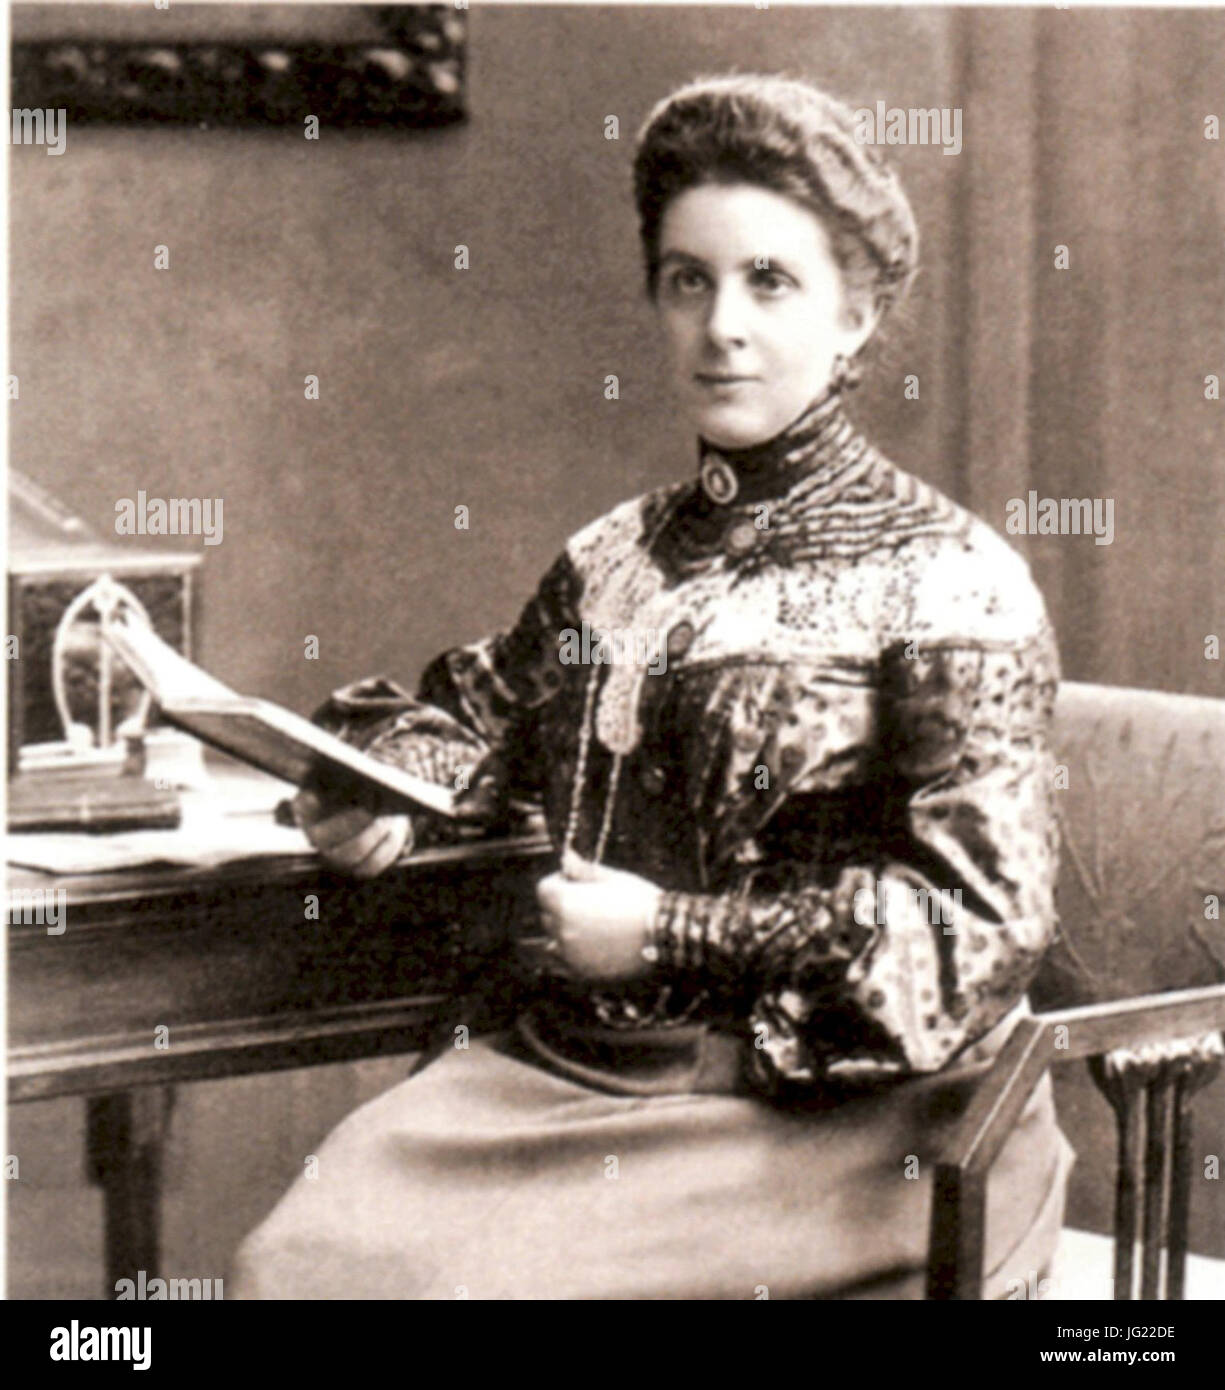 Gräfin Olga Alberti von Poja um 1900 Stock Photo - Alamy